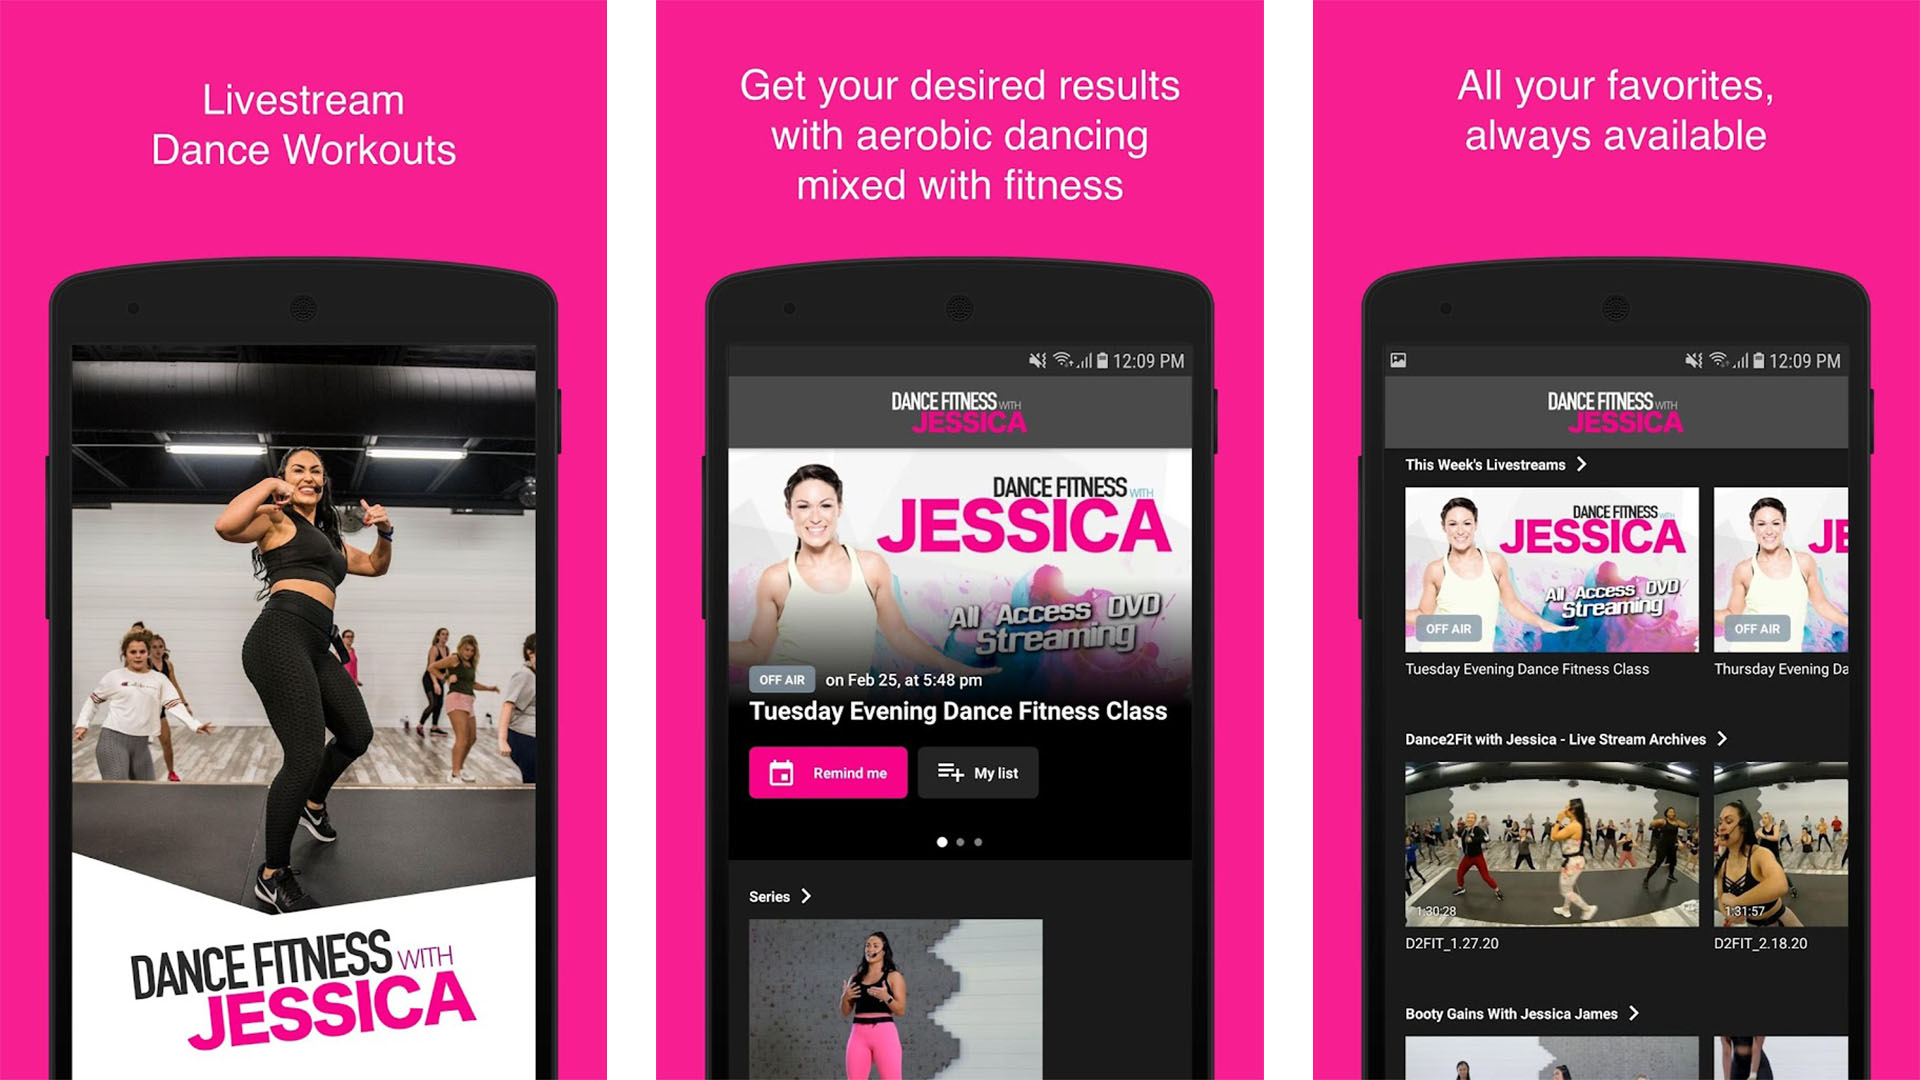 Dance Fitness with Jessica screenshot 2022